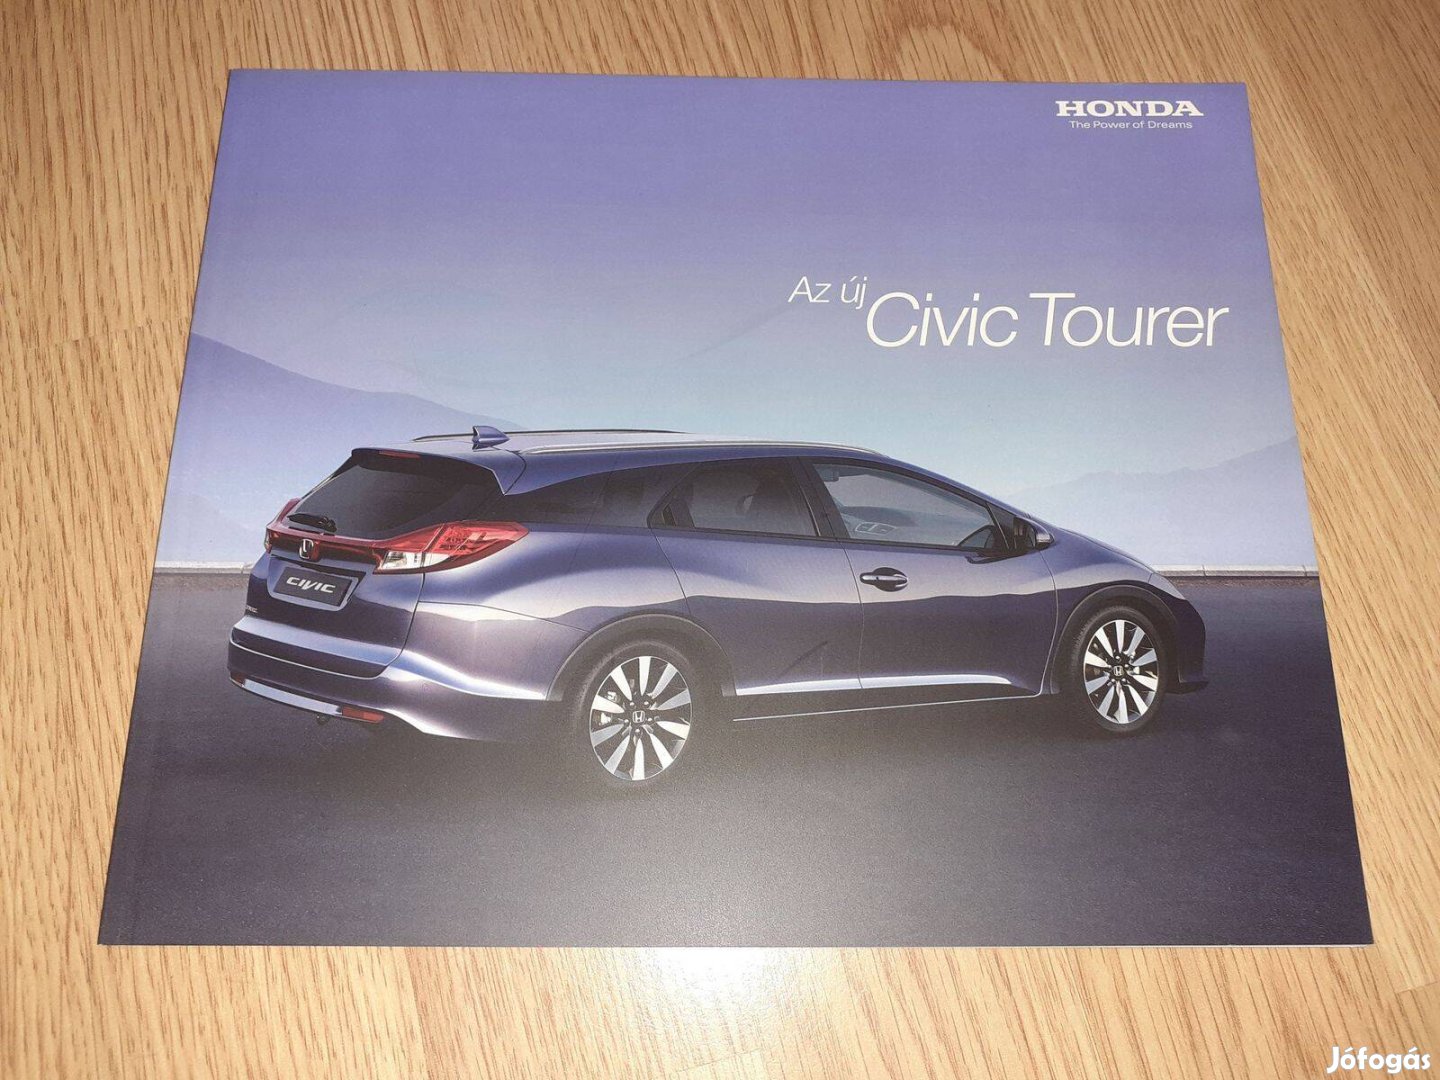 Honda Civic Tourer prospektus - 2014, magyar nyelvű